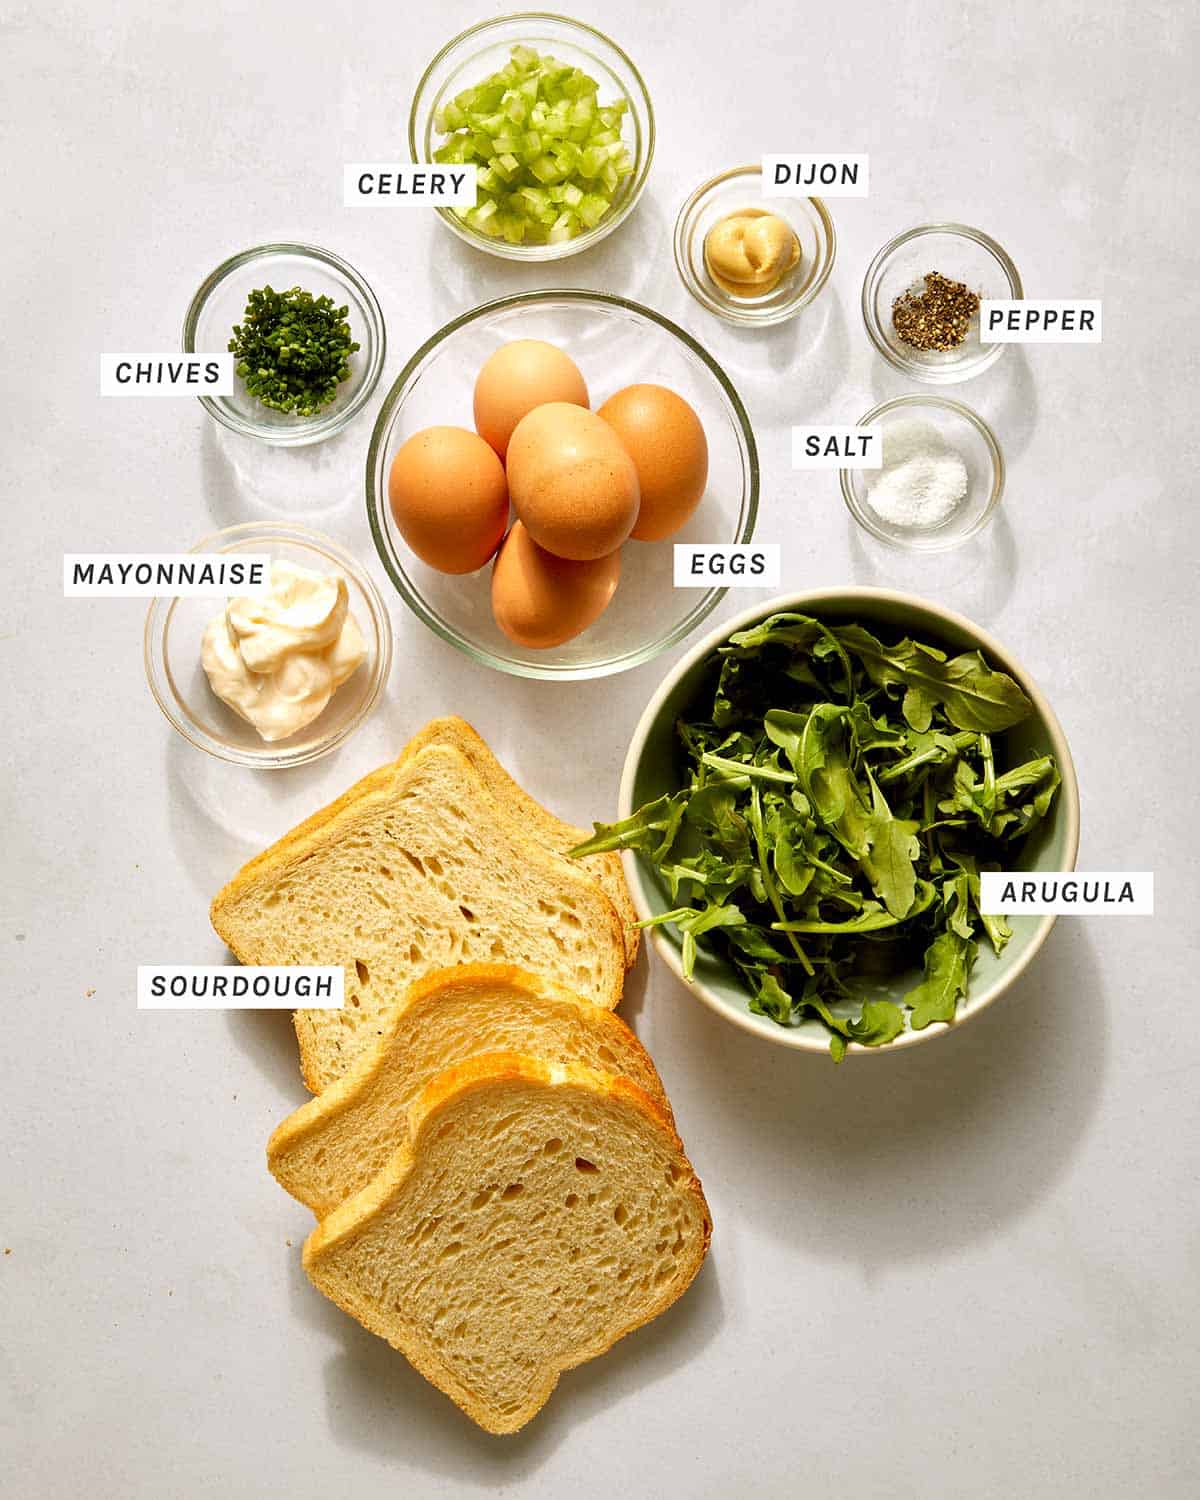 Egg Sandwich Recipe: How to make Egg Sandwich Recipe at Home